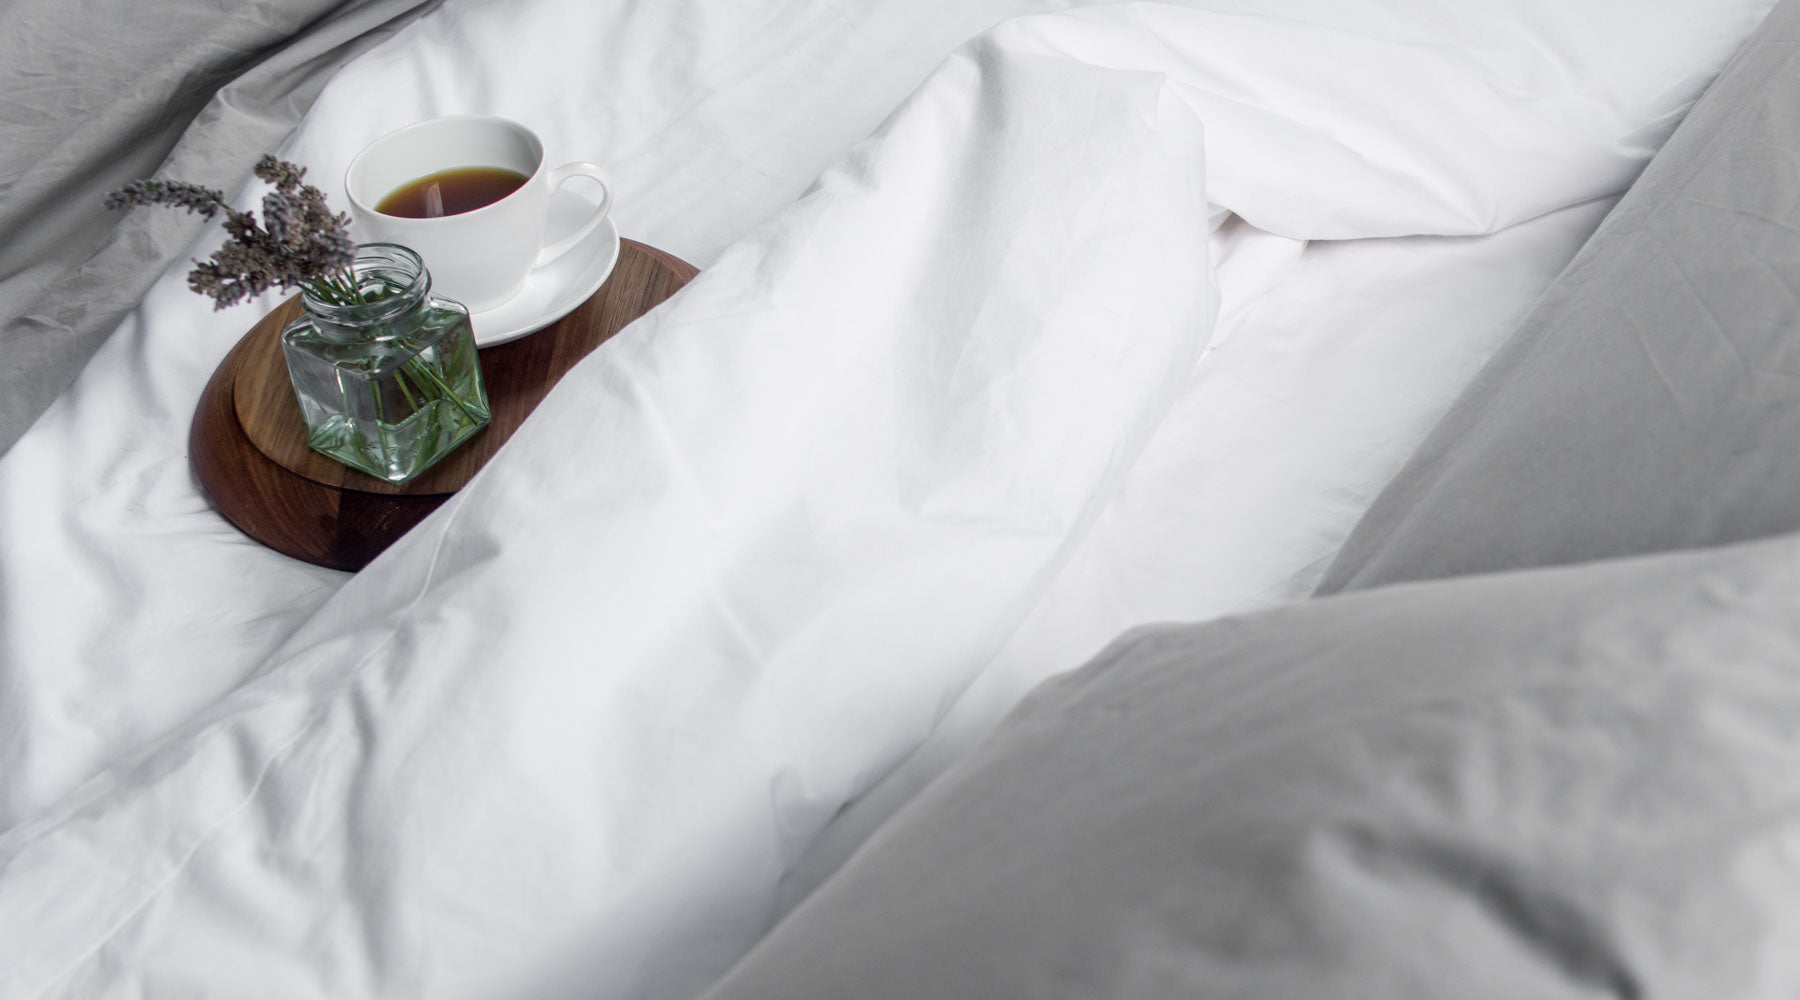 Breakfast in bed in cotton sheets